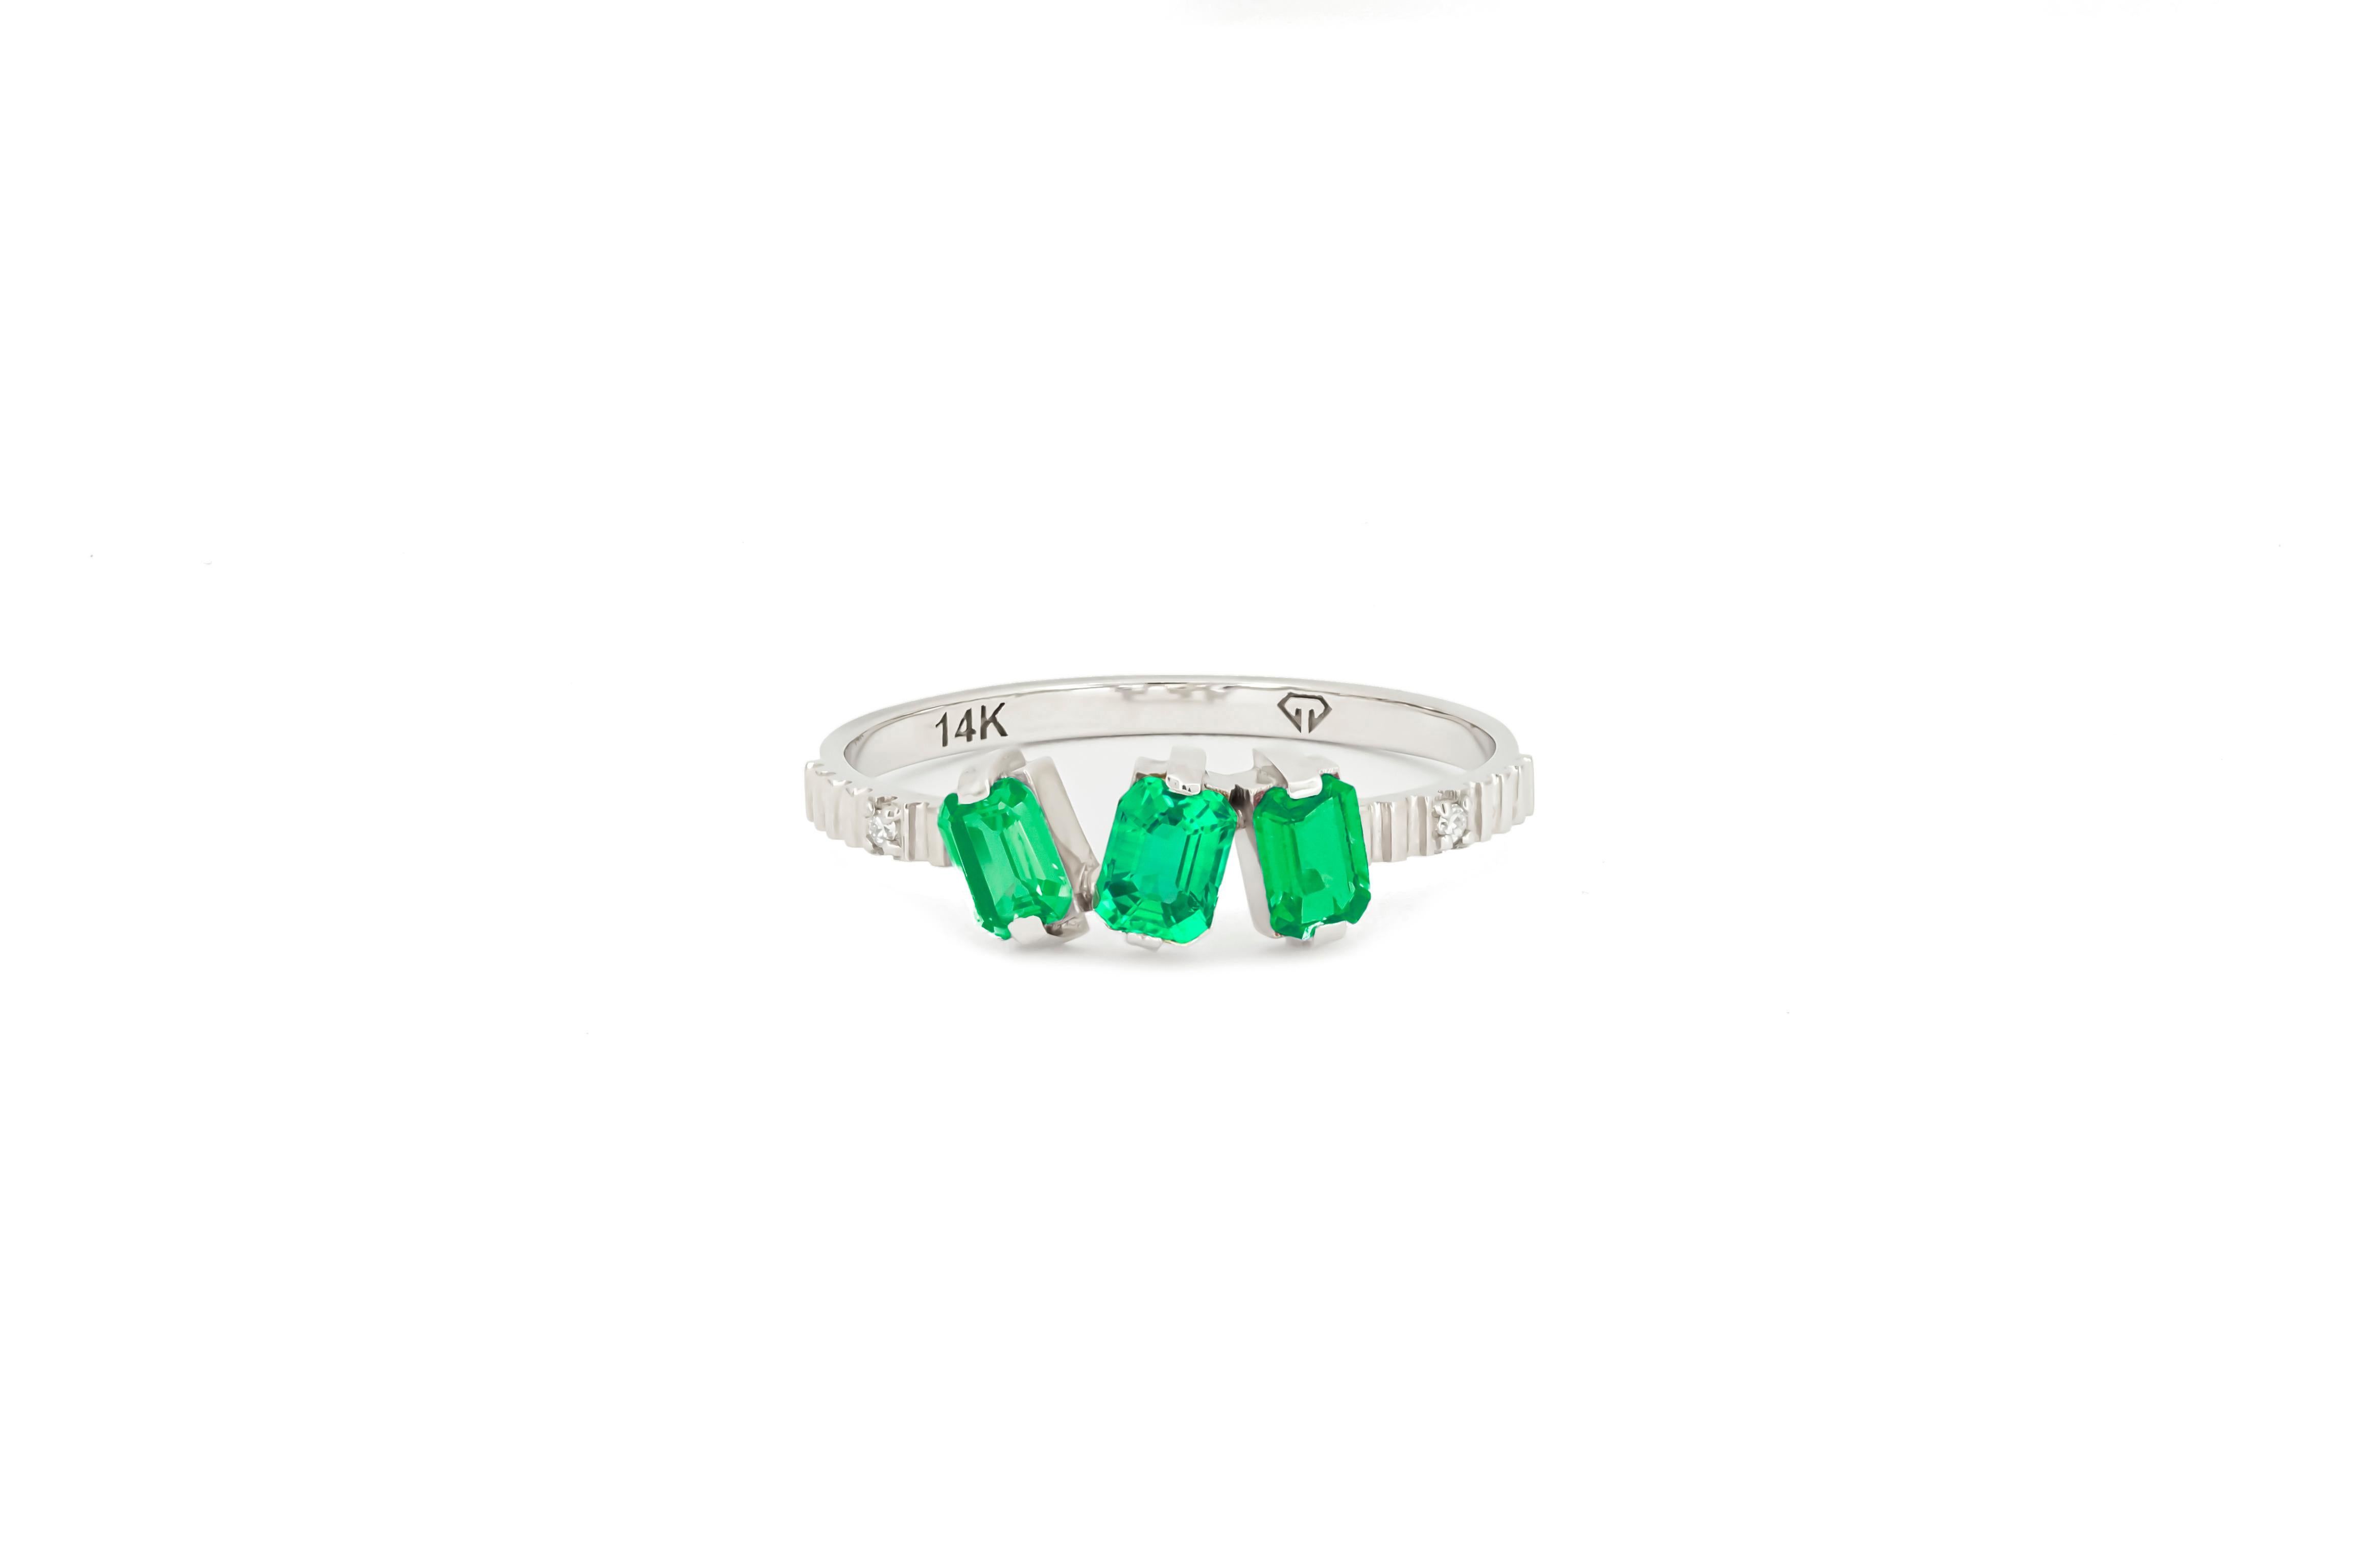 Monochrome green gemstone 14k ring. 
Green gemstone engagement 14k gold ring. Baguette lab chrome diopside gold ring. Delicate chrome diopside ring. Three gemstone ring.

Metal:14k gold
Weight: 2 gr depends from size

Gemstones:
3 green color lab